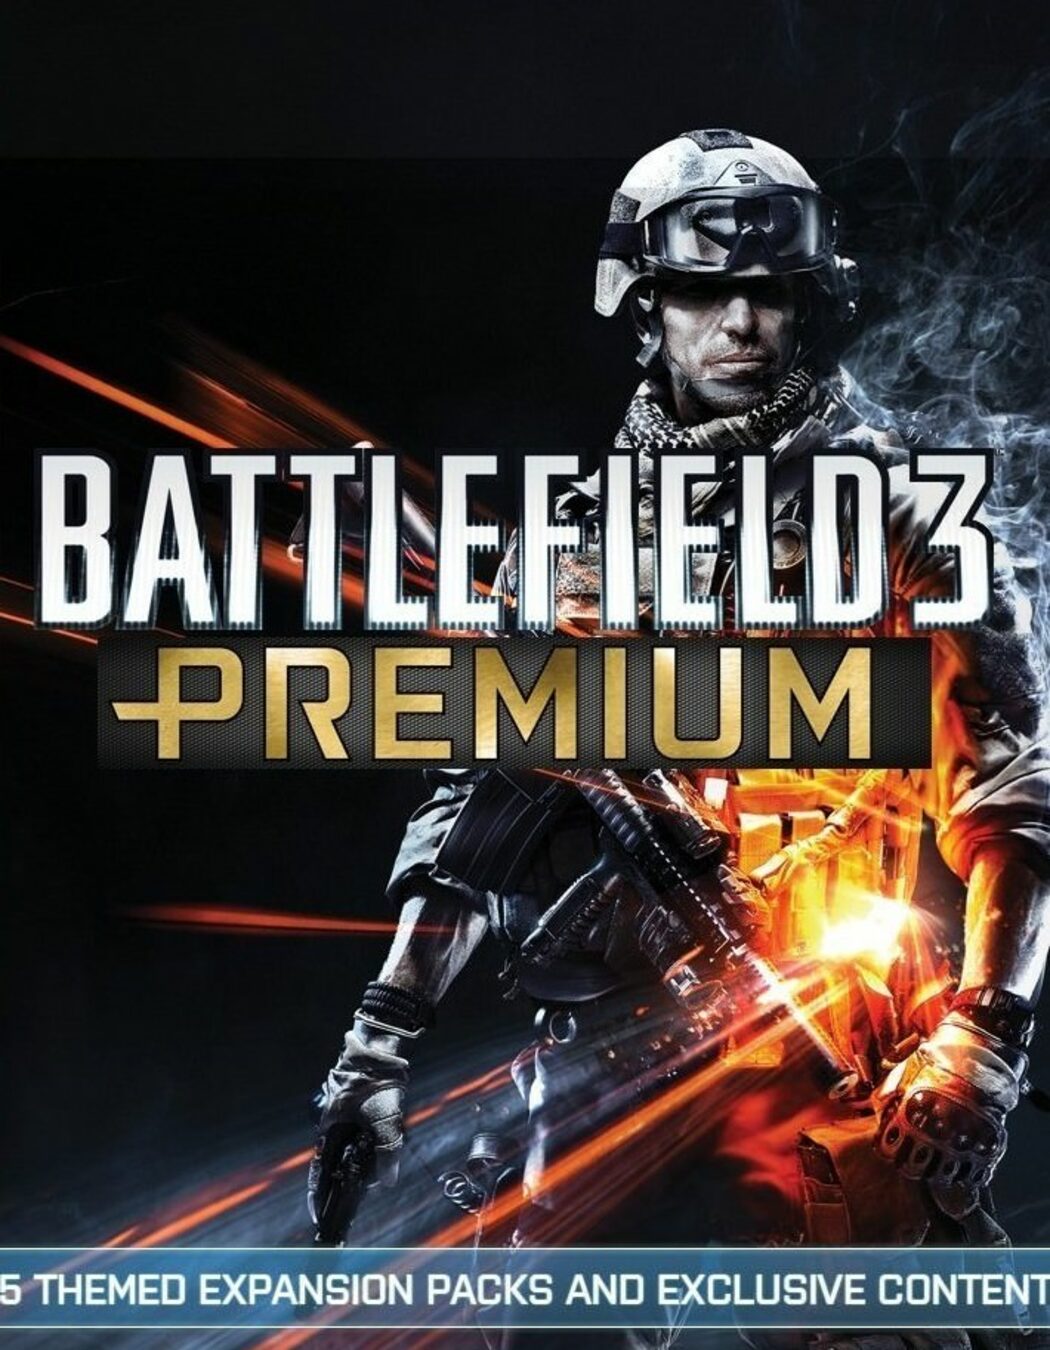 Buy Battlefield 4 incl. Premium Pack CD key for PC!